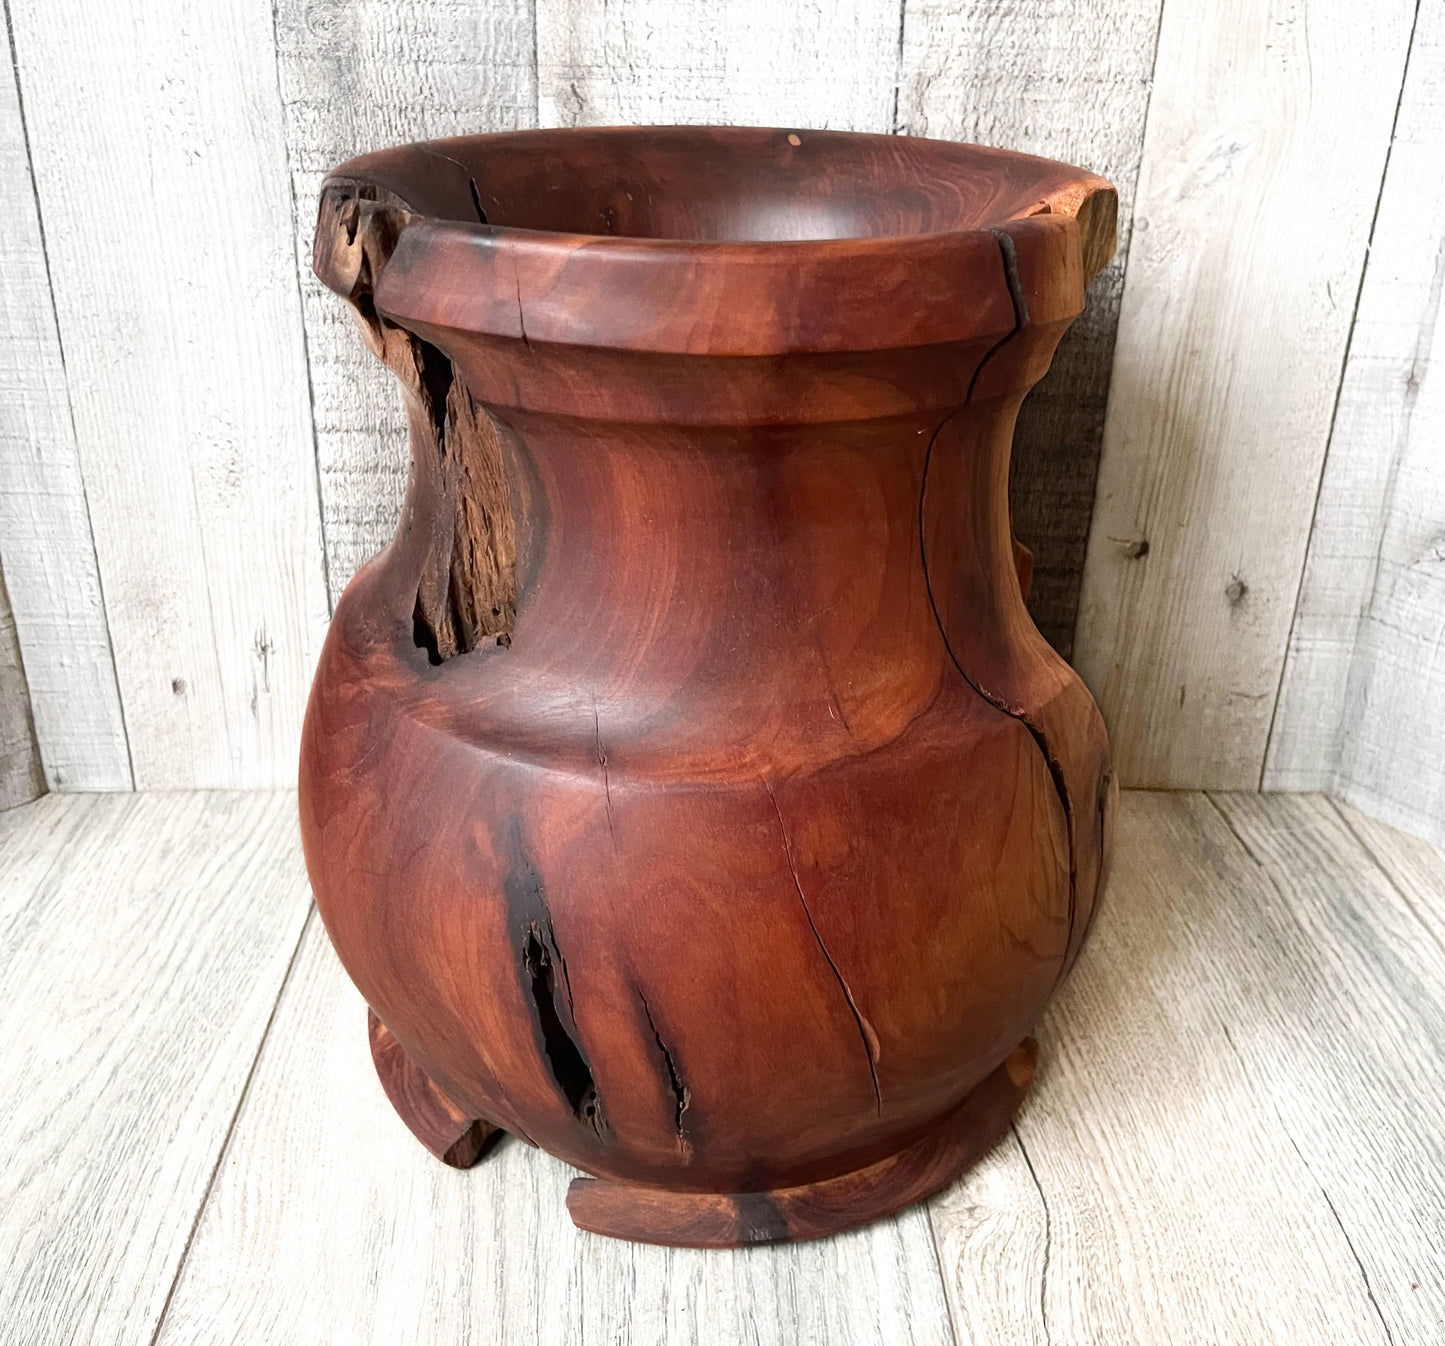 Unique Manzanita wood vases with natural edges. 9" diameter x 10" tall